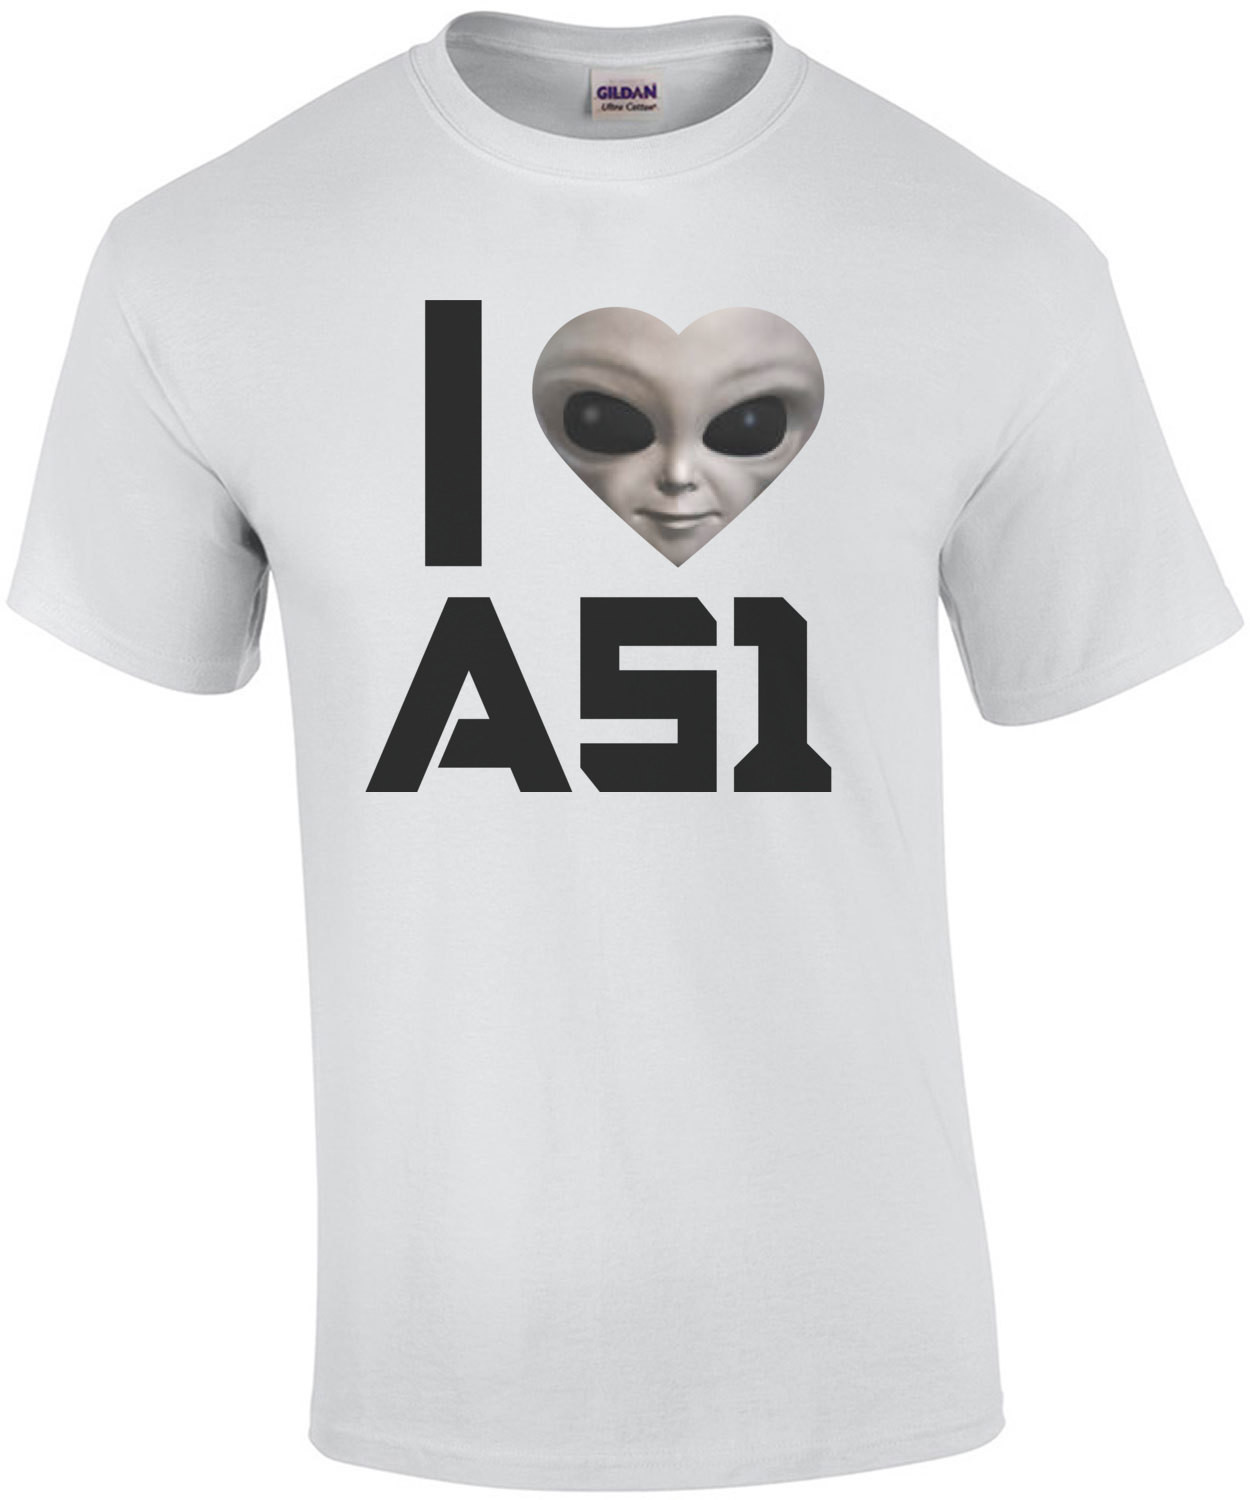 I love area 51 - Alien - Nevada T-Shirt